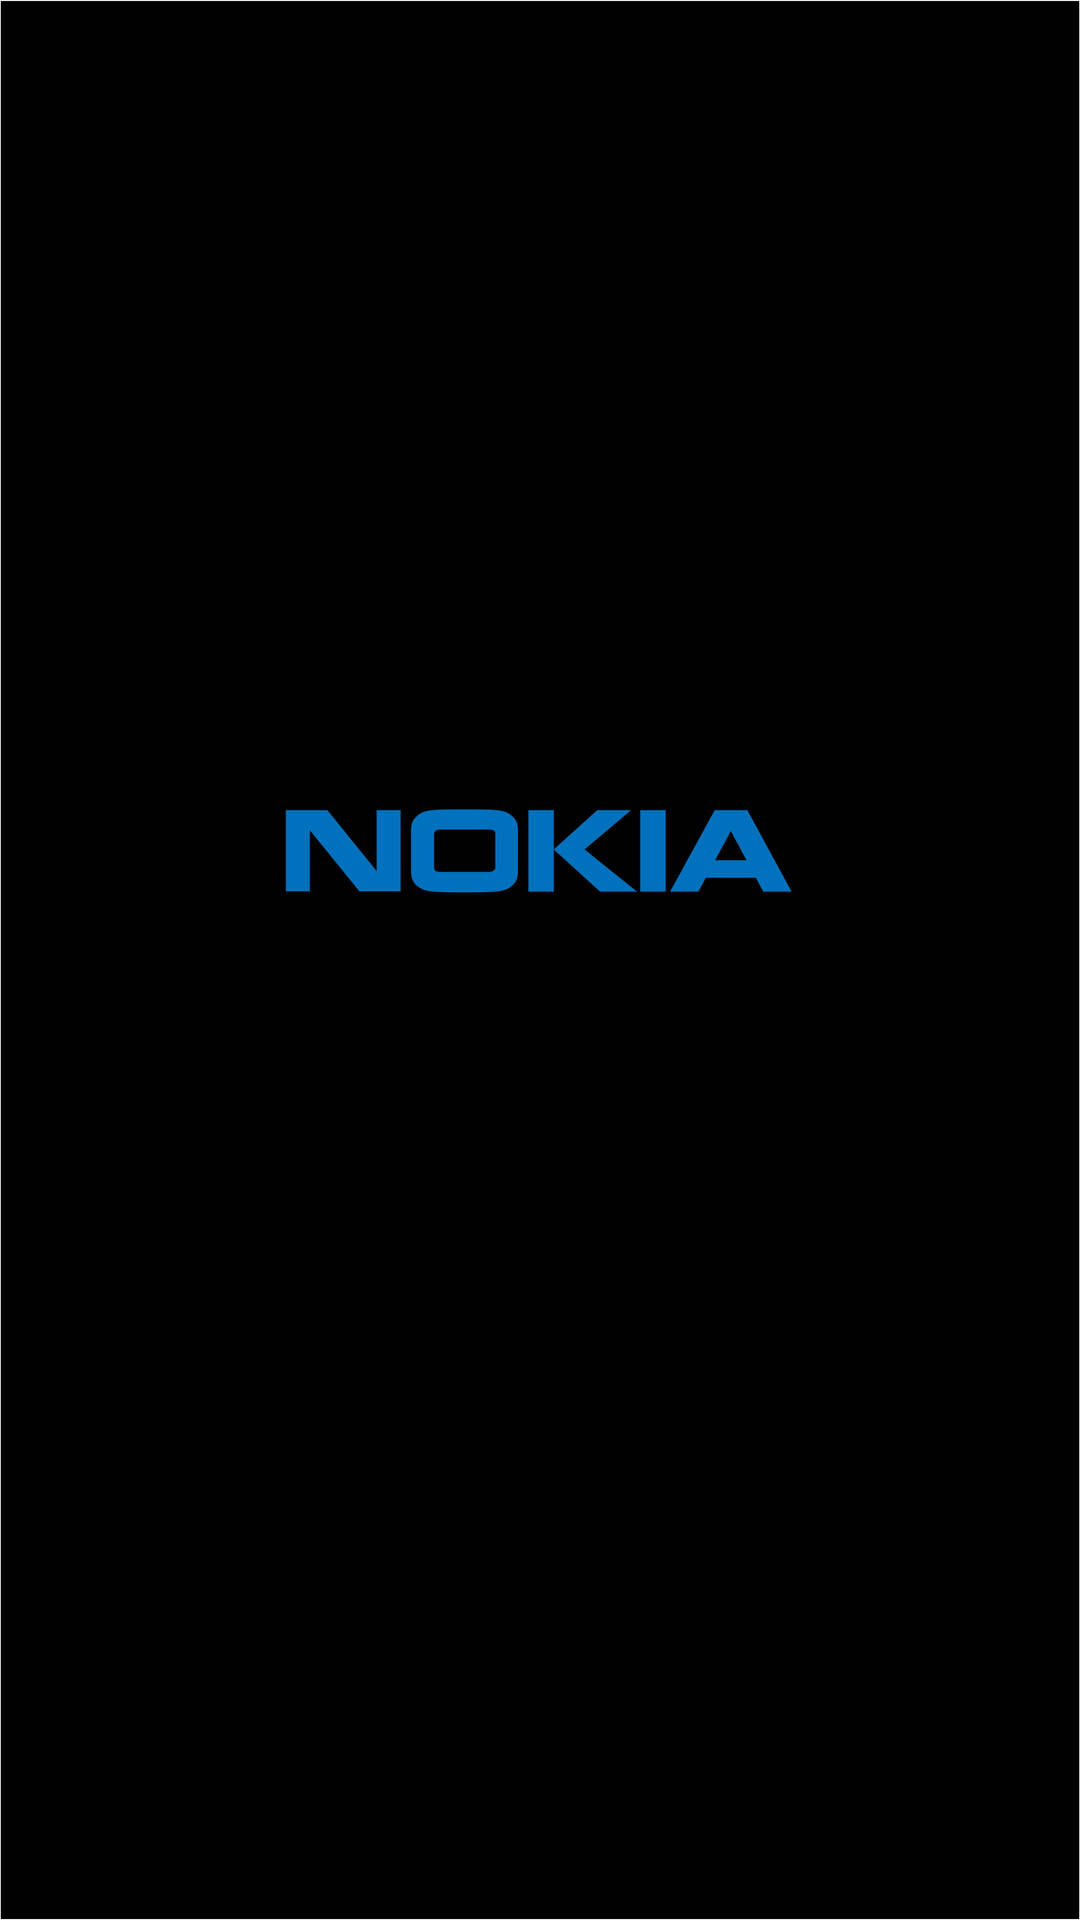 Nokia Wordmark Logo 8k Phone